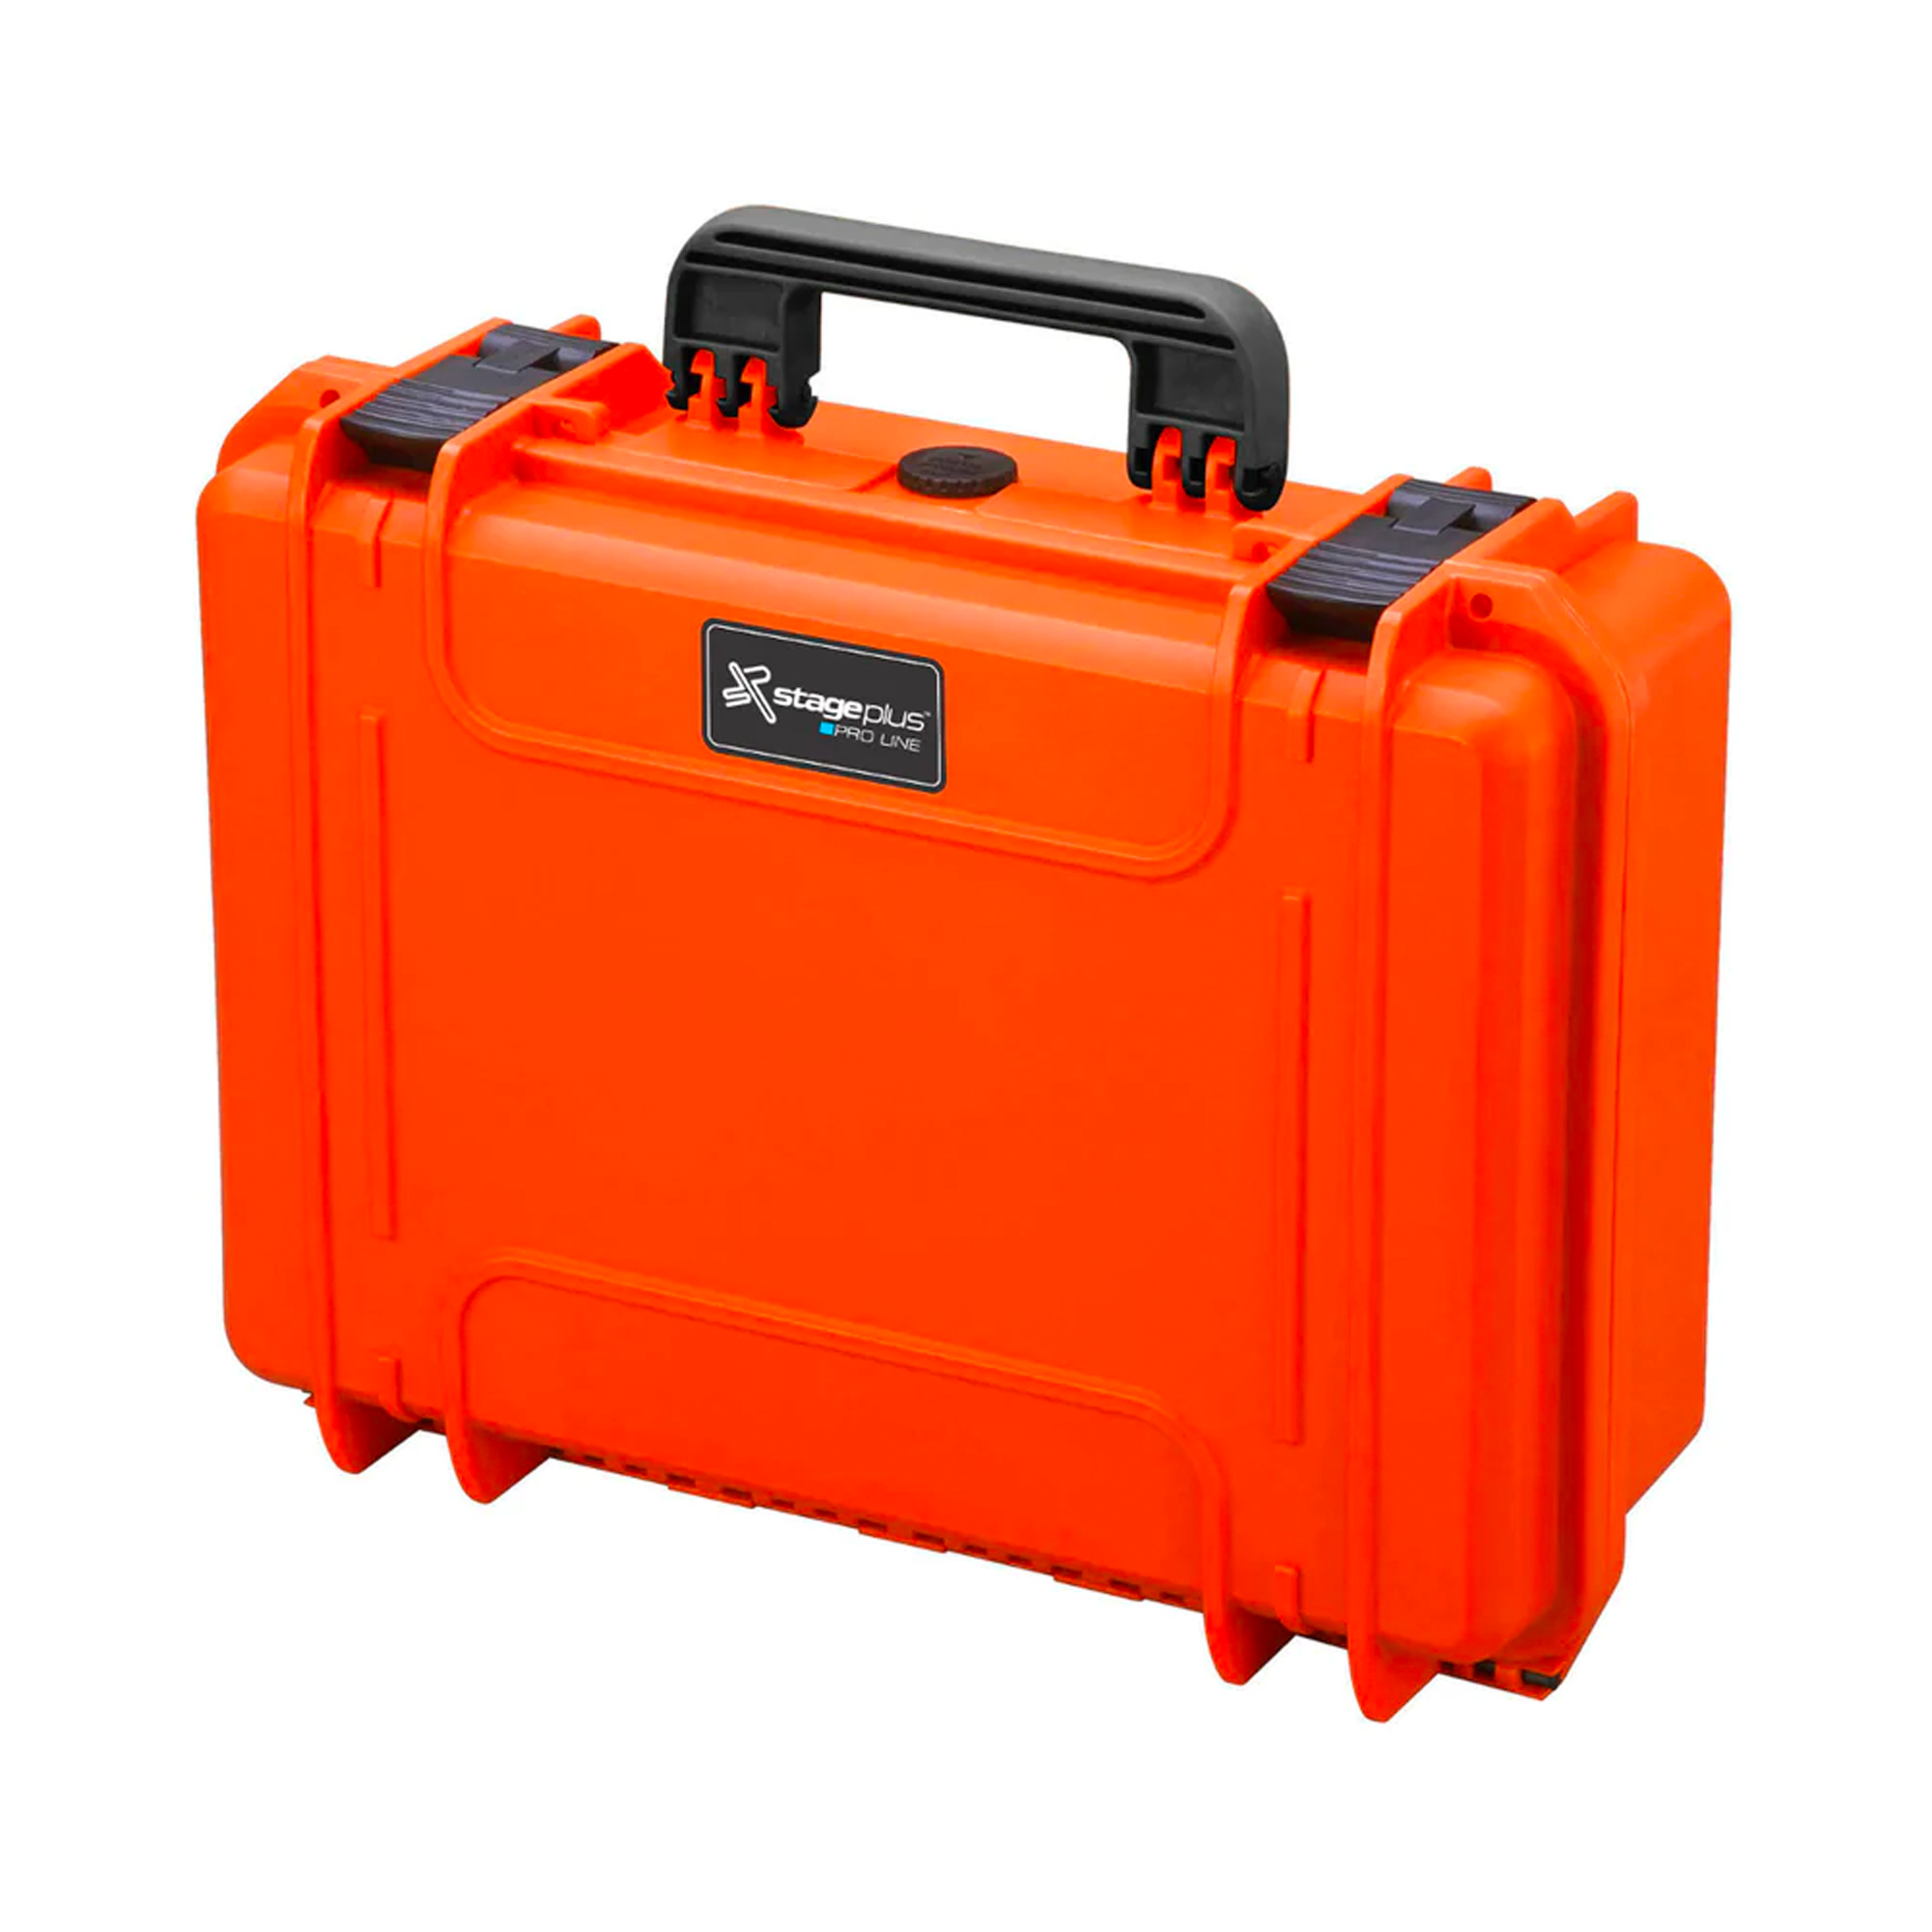 Stage Plus PRO 430S Orange Carry Case, Cubed Foam, ID: L426xW290xH159mm